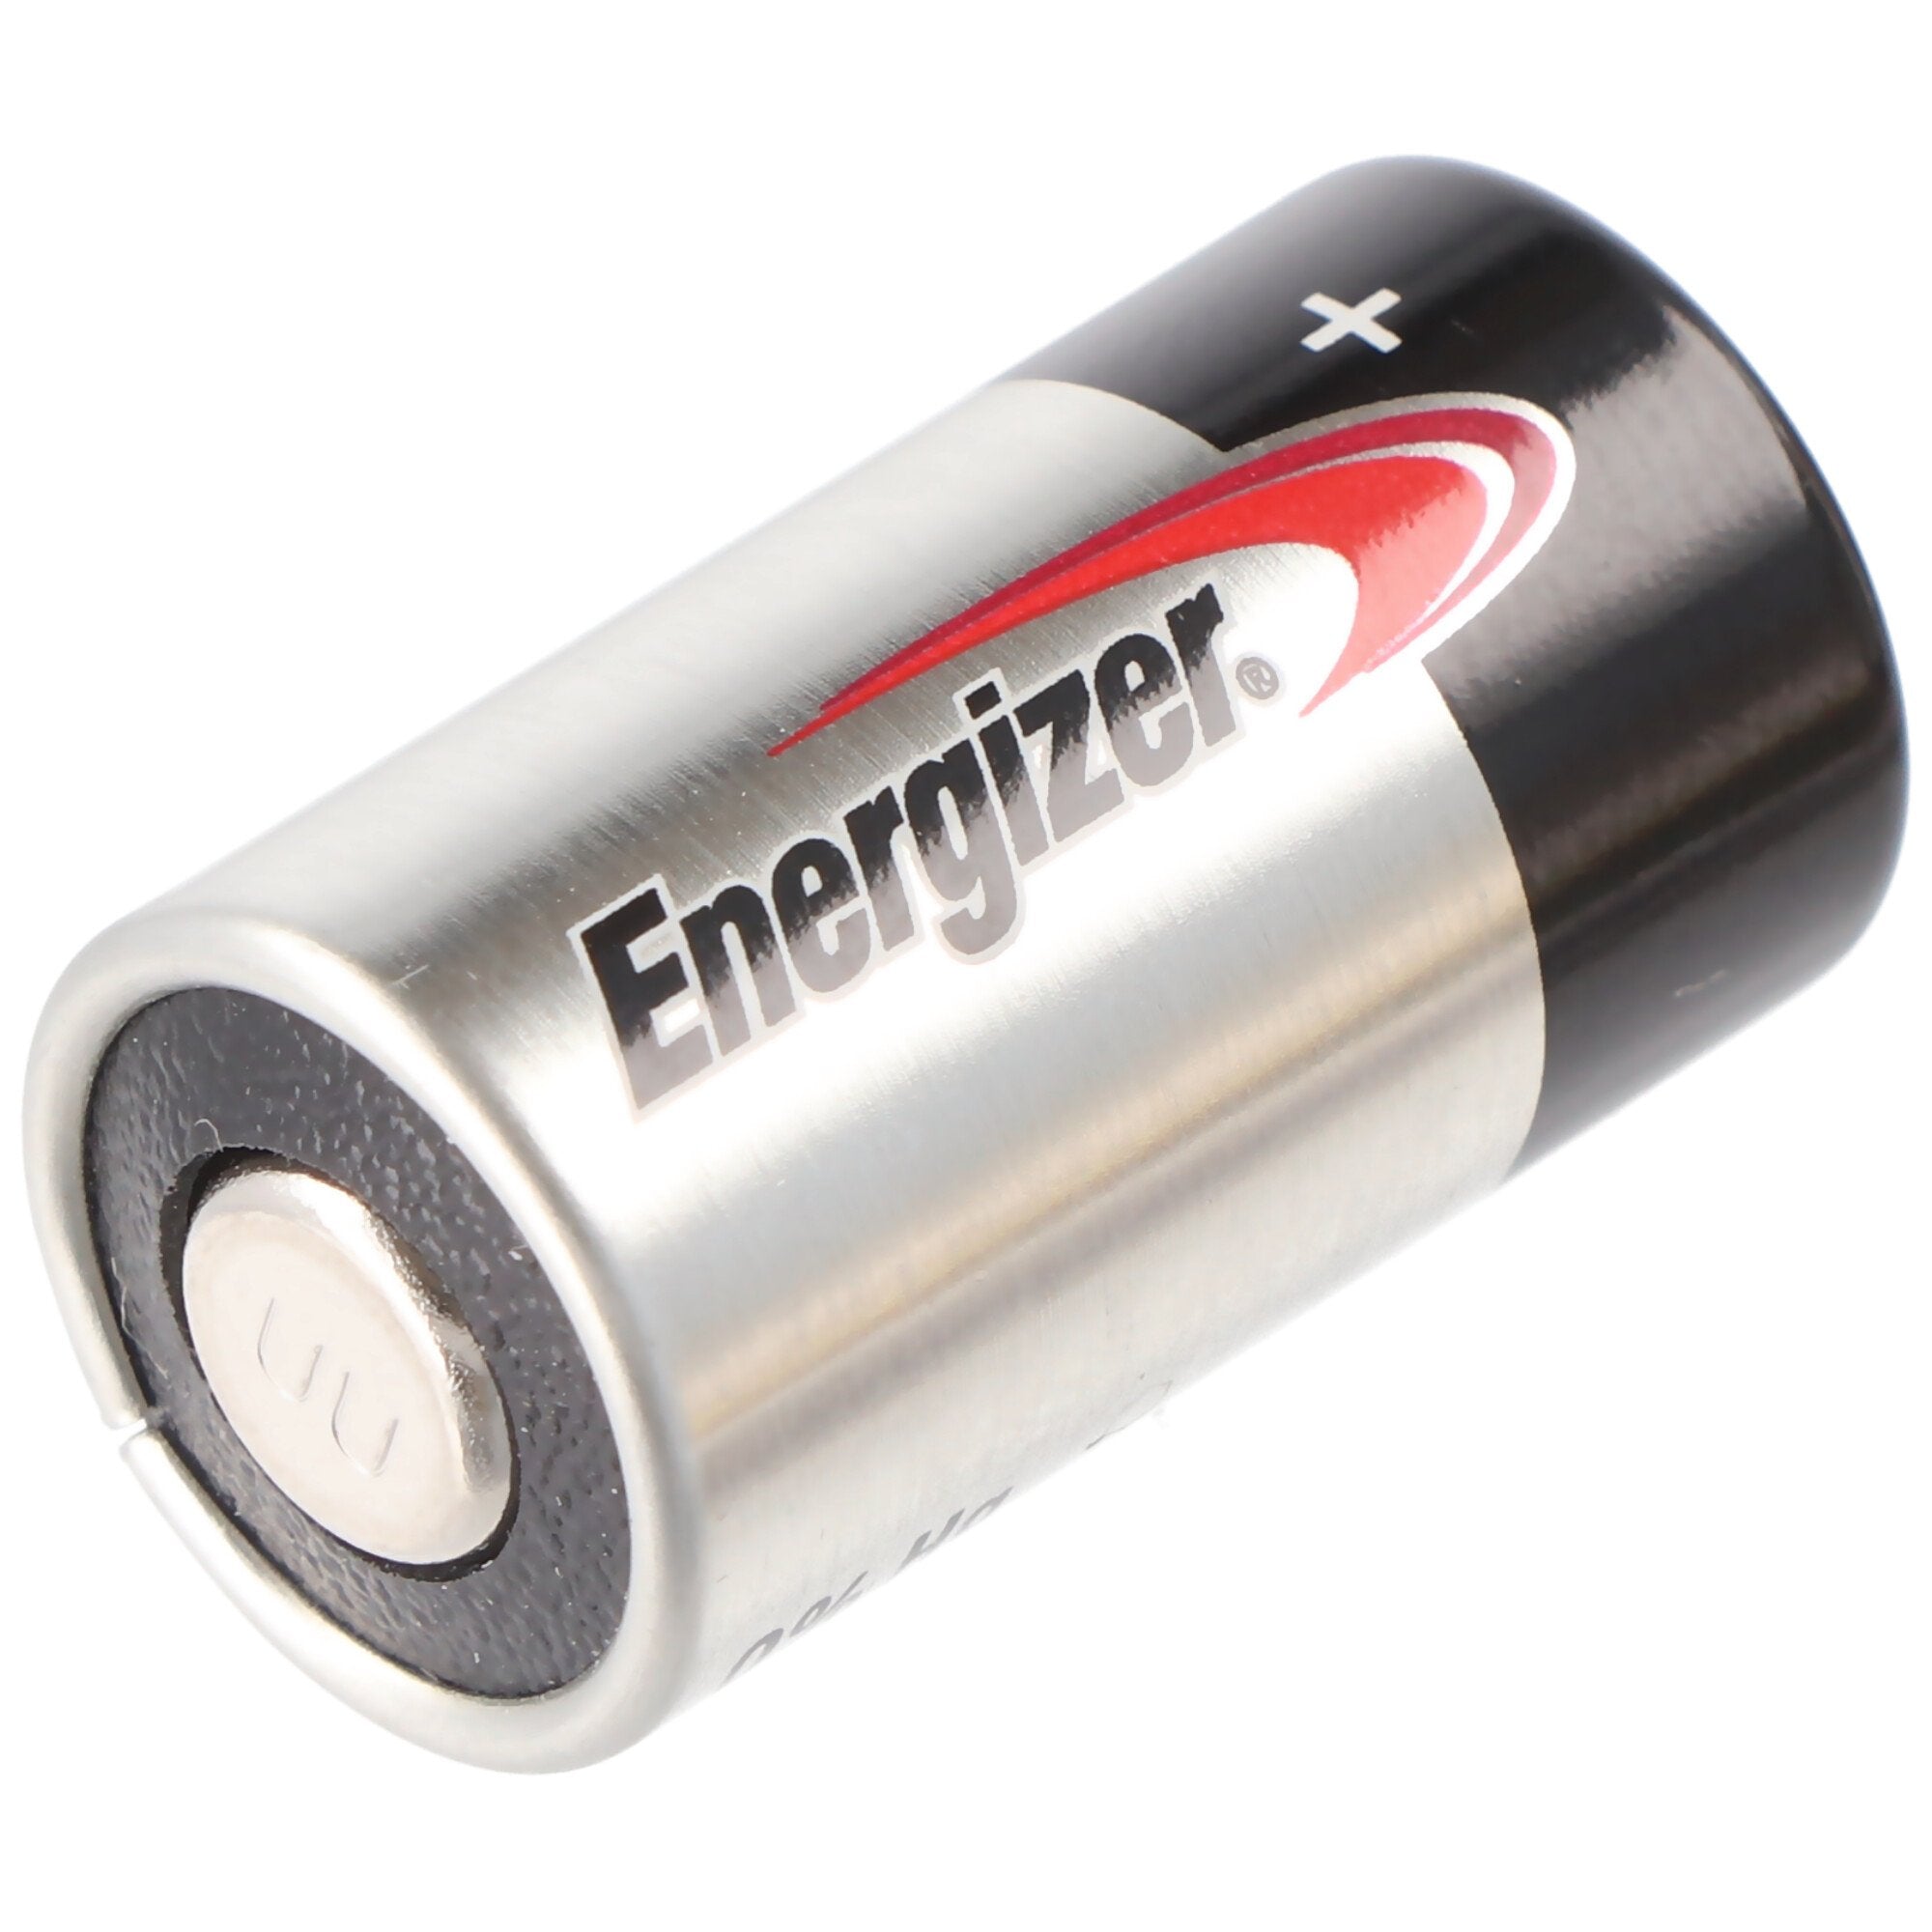 Energizer A544 alkaline special battery 4LR44 alkaline manganese 6V 178mAh 2 pieces